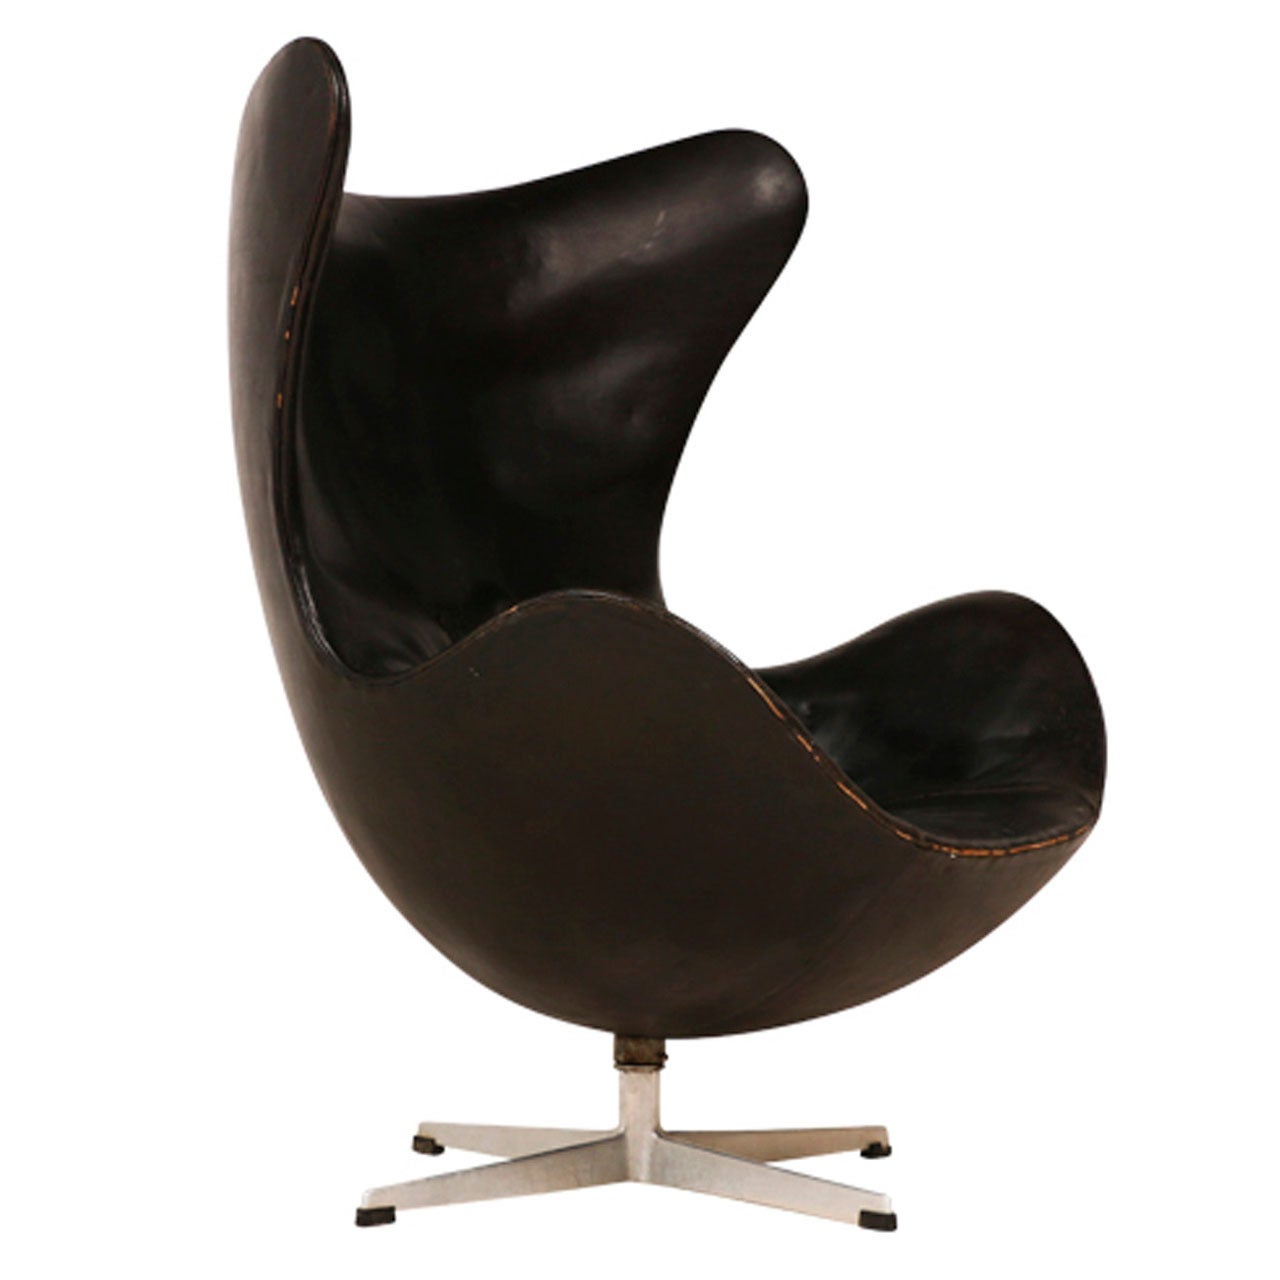 Rare Arne Jacobsen First Generation “Egg” Chair for Fritz Hansen